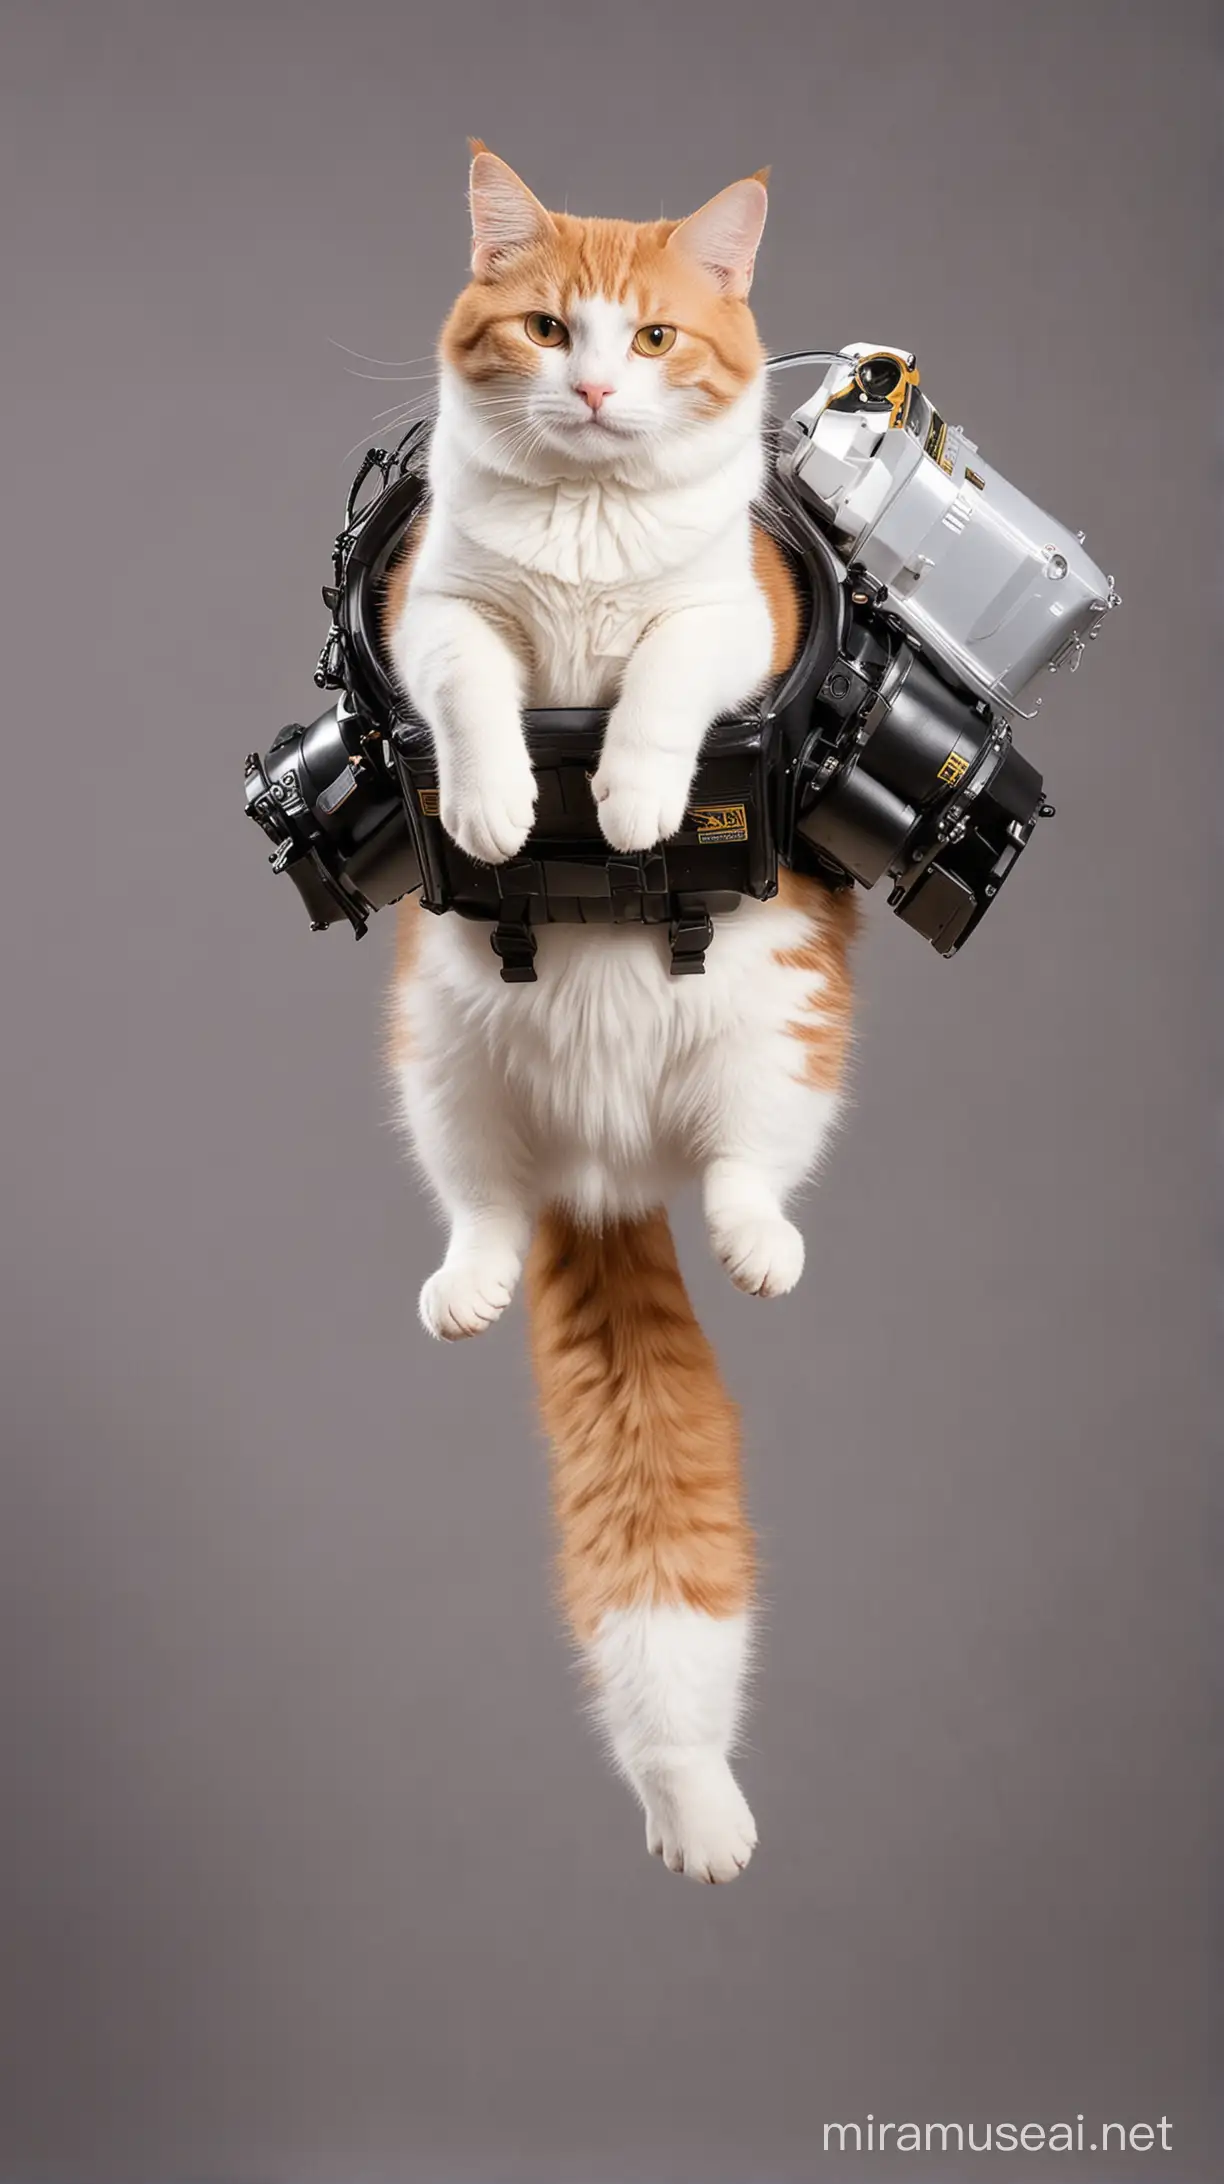 Cat using a jetpack